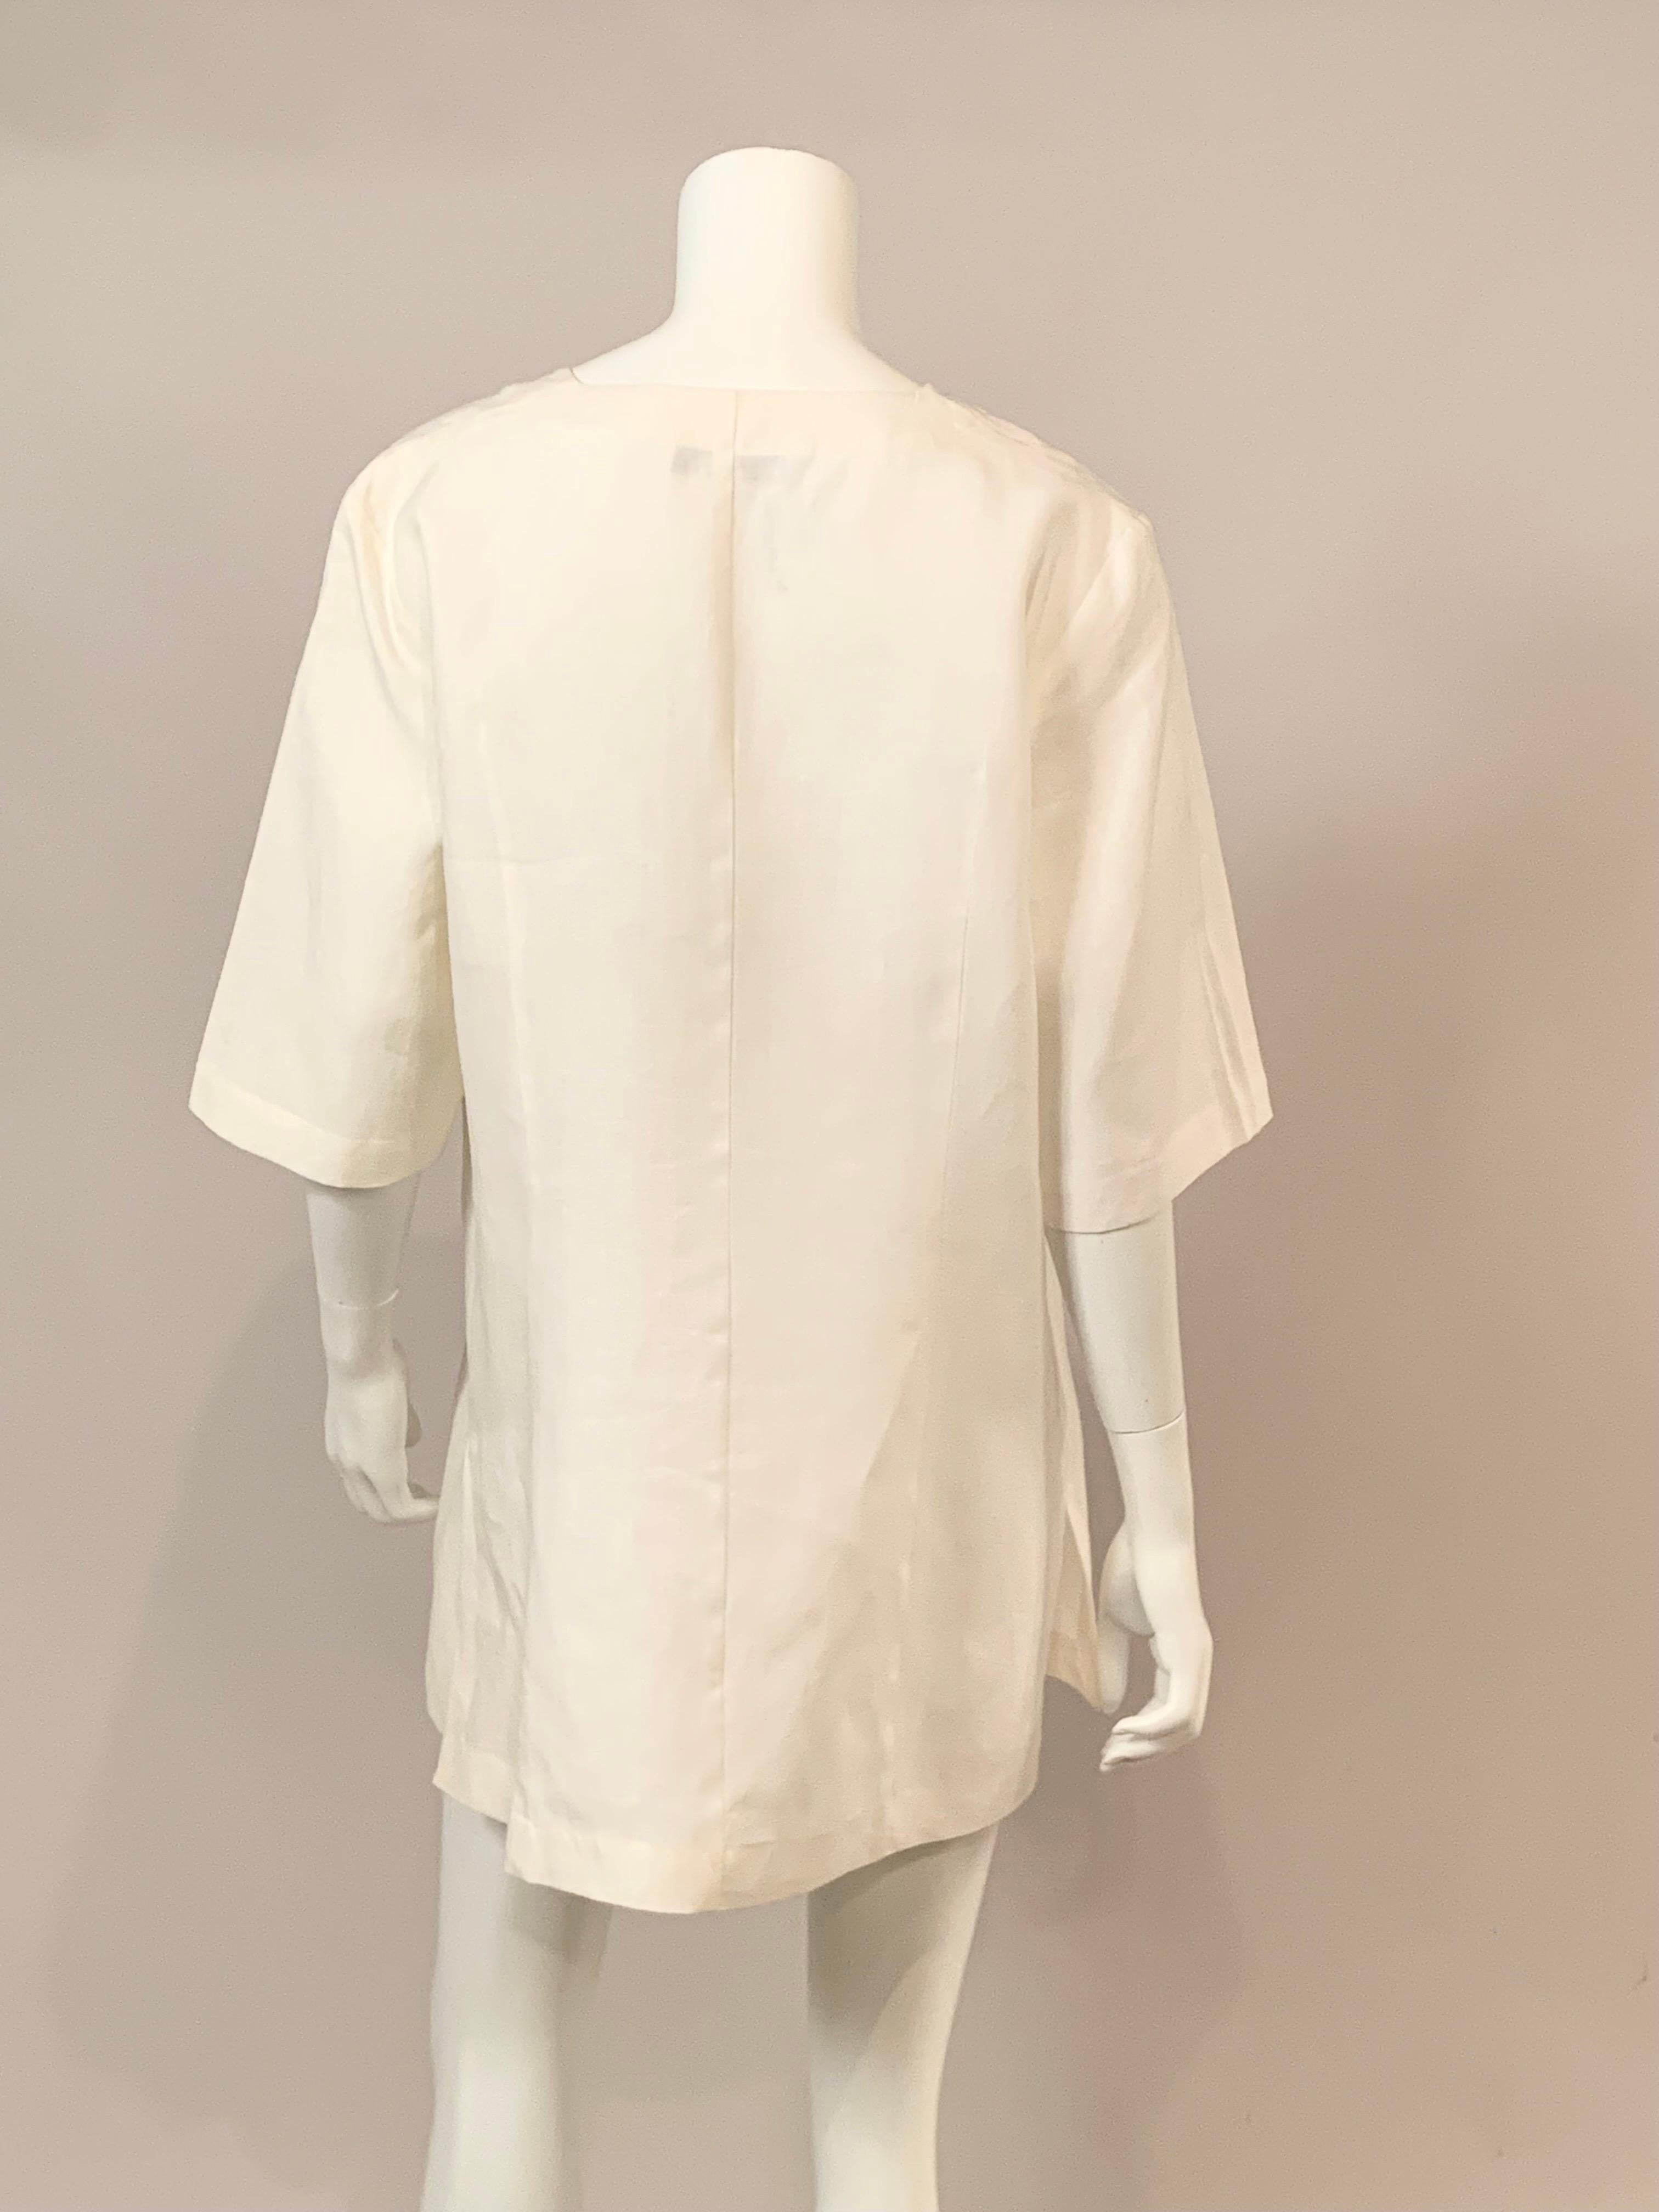 Women's Marina Rinaldi White Linen Tunic   Never Worn For Sale